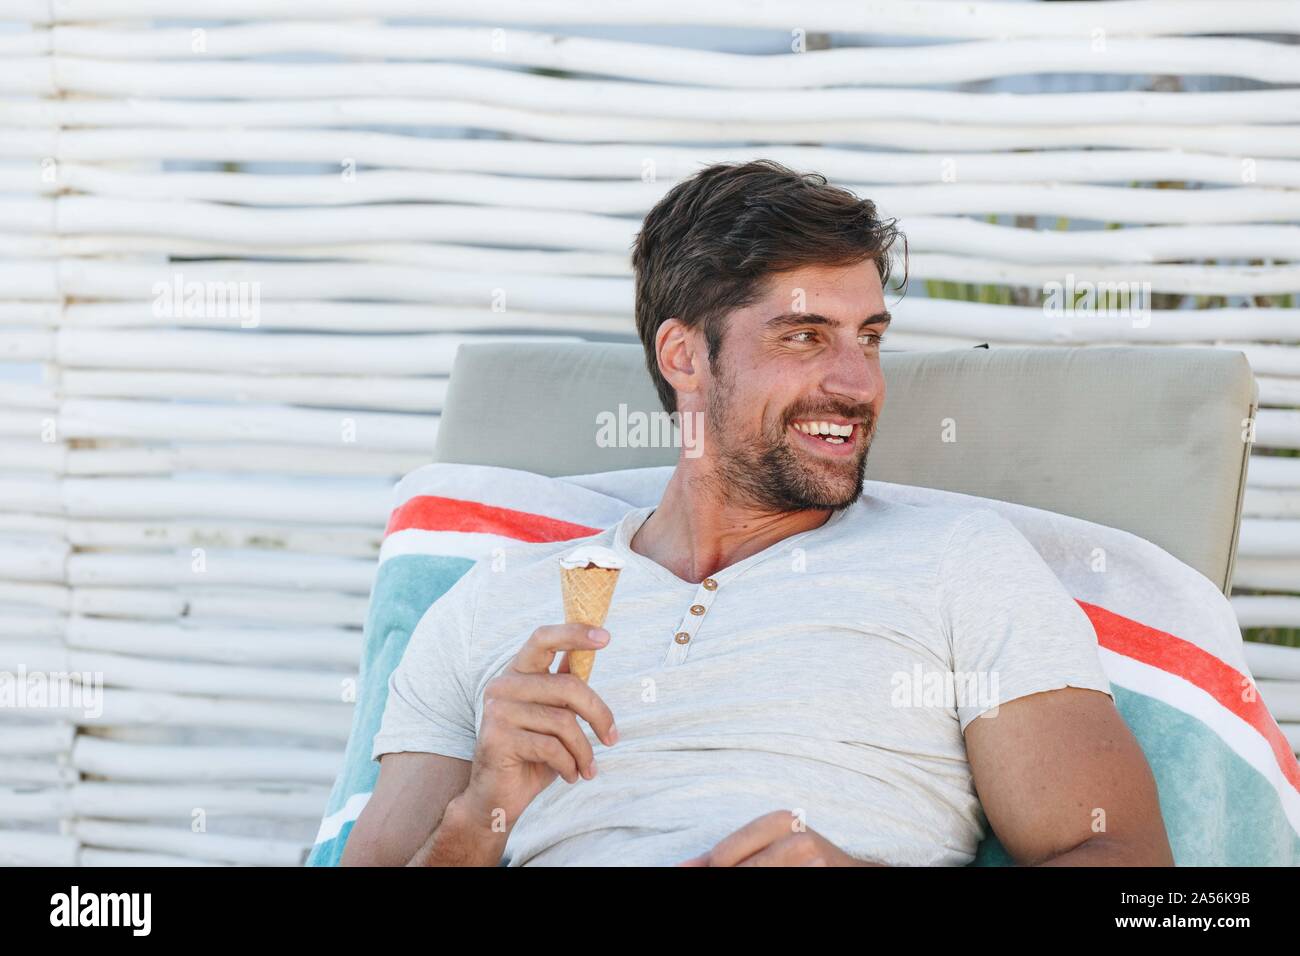 Man enjoying ice cream cone on deckchair Stock Photo